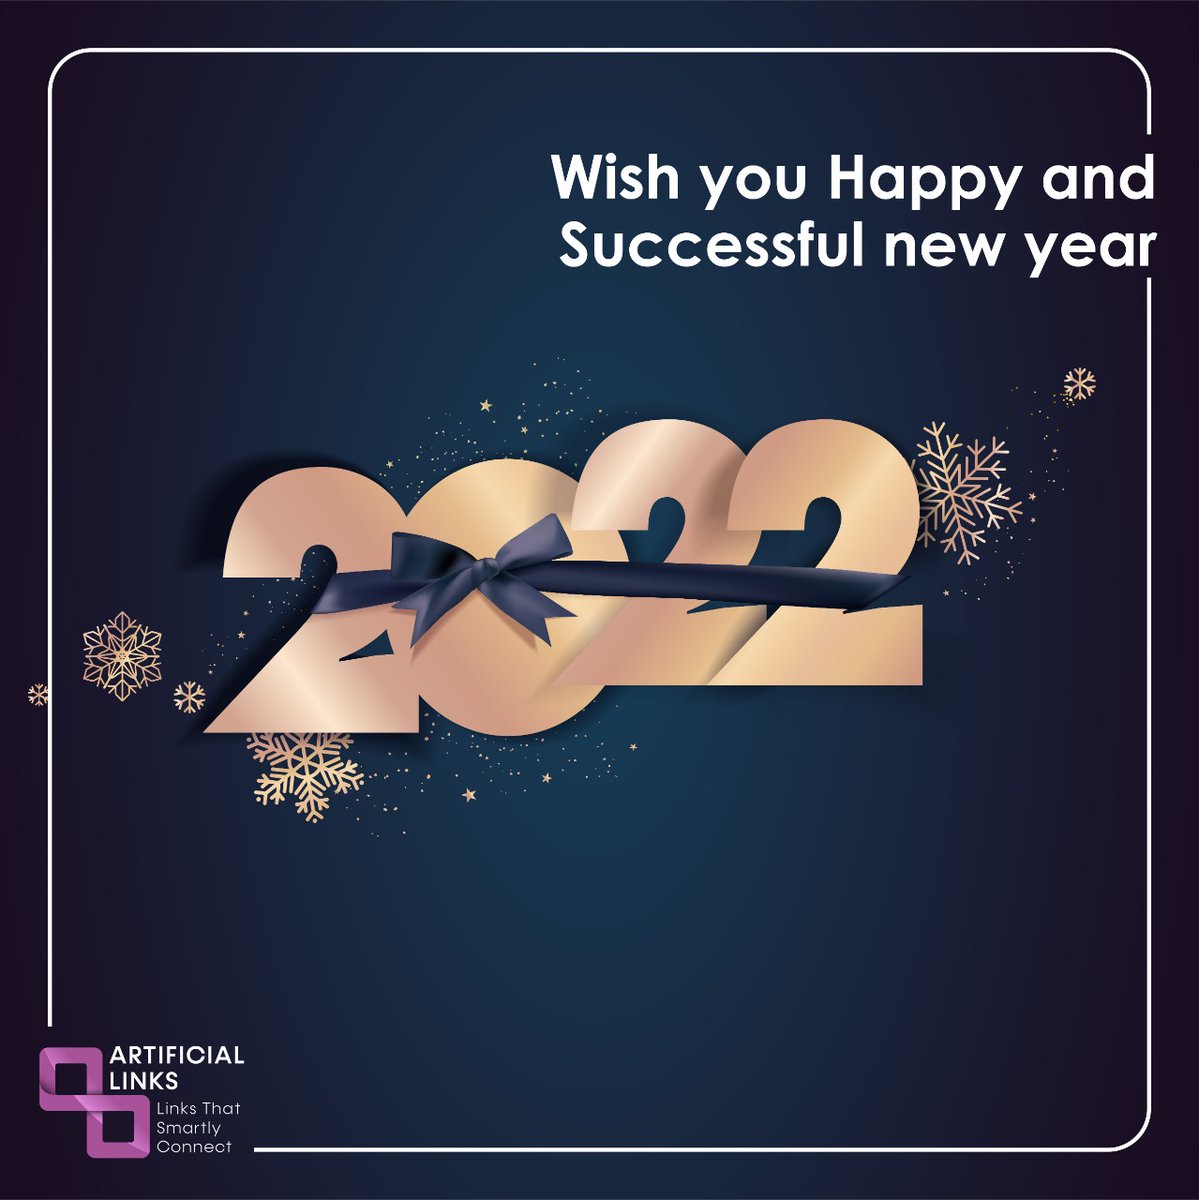 Artificial Links wishes you a happy new year! الروابط المتكاملة تتمنى لكم سنة جديدة سعيدة! #NewYear #graphs #consultancy #neo4j #ArtificialIntelligence #SaudiArabia #Riyadh